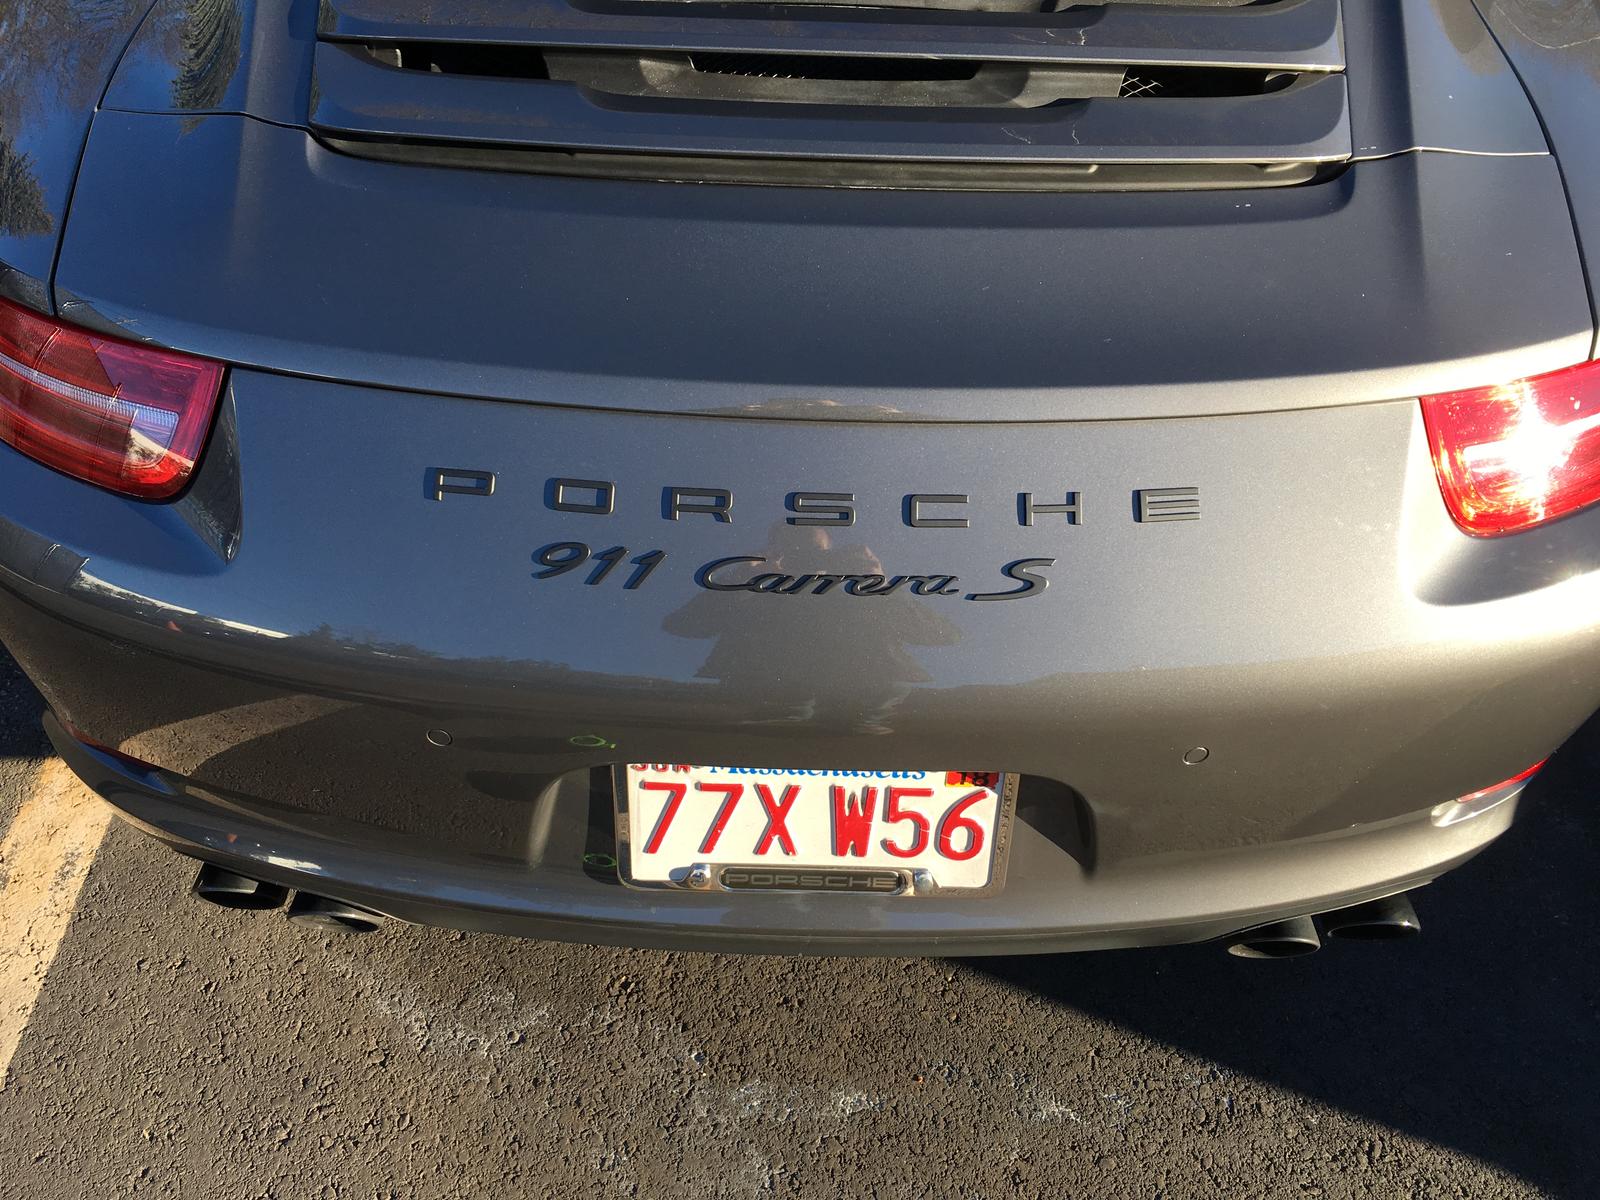 Replaced Rear Emblems on My  S - Rennlist - Porsche Discussion Forums